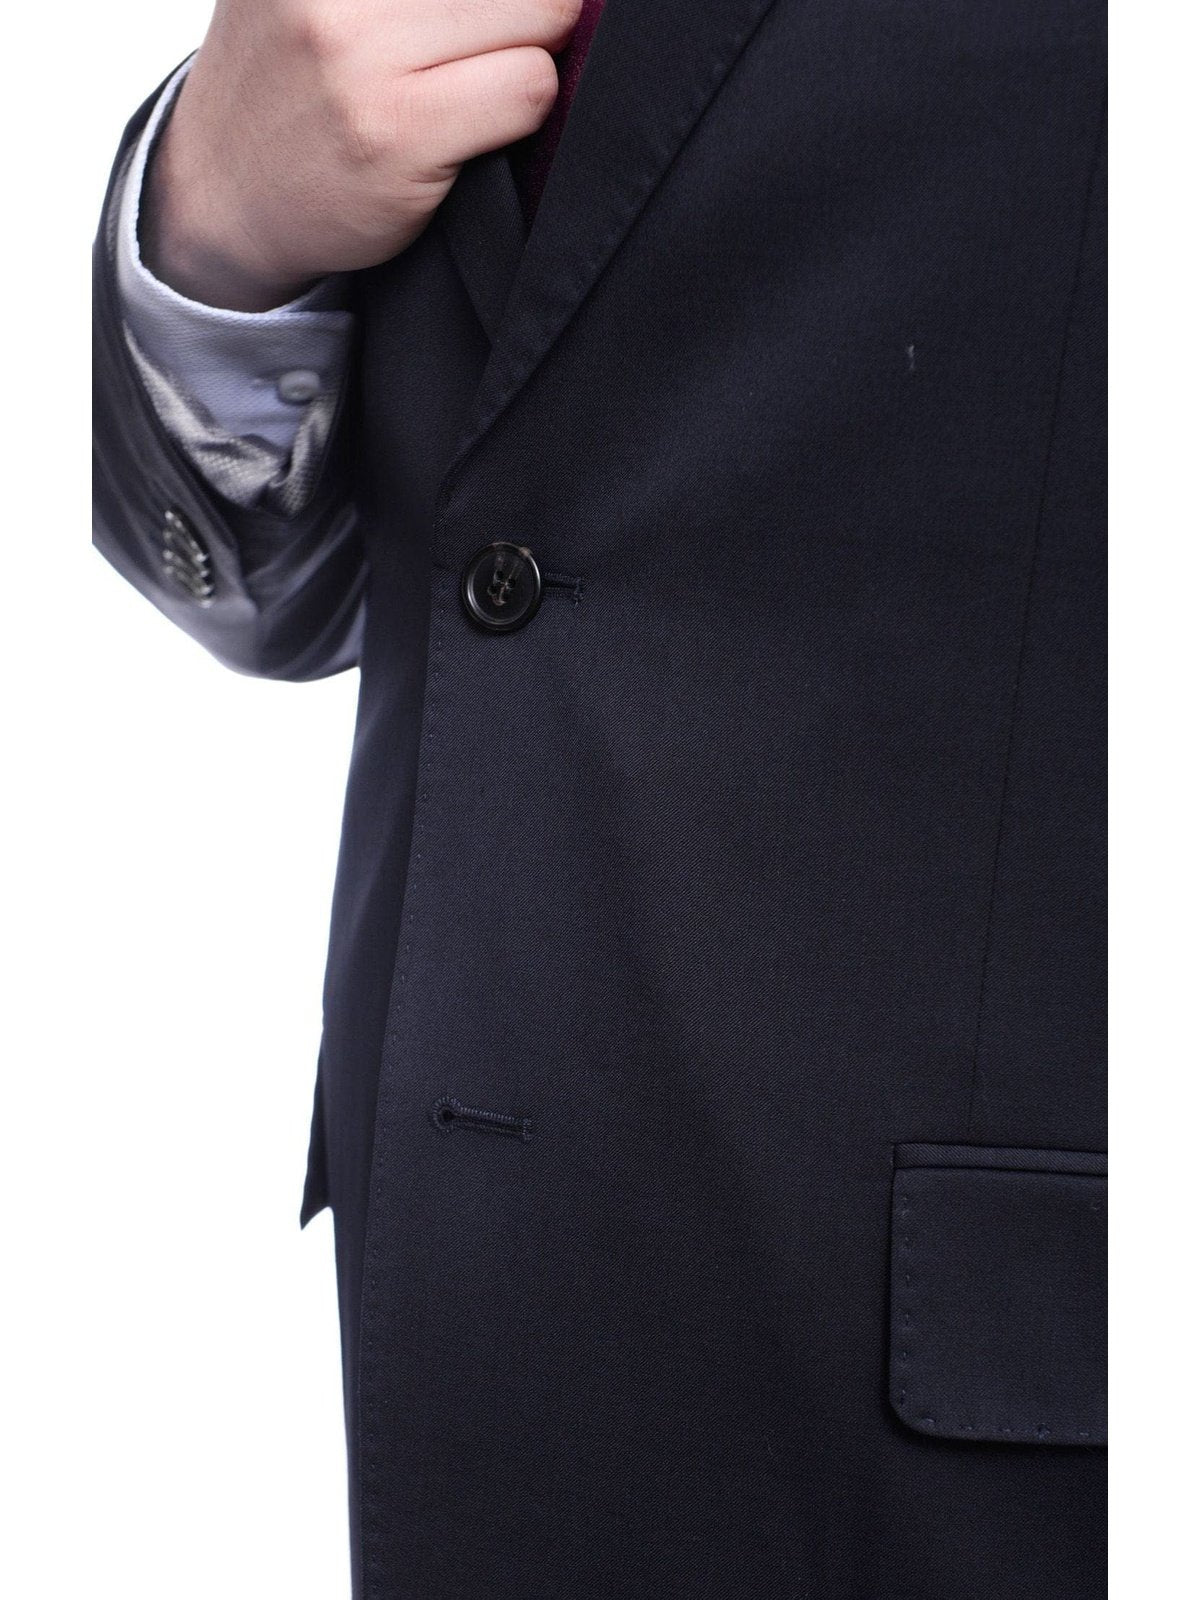 Arthur Black TWO PIECE SUITS Men&#39;s Arthur Black Executive Portly Fit Solid Navy Blue Two Button Wool Suit